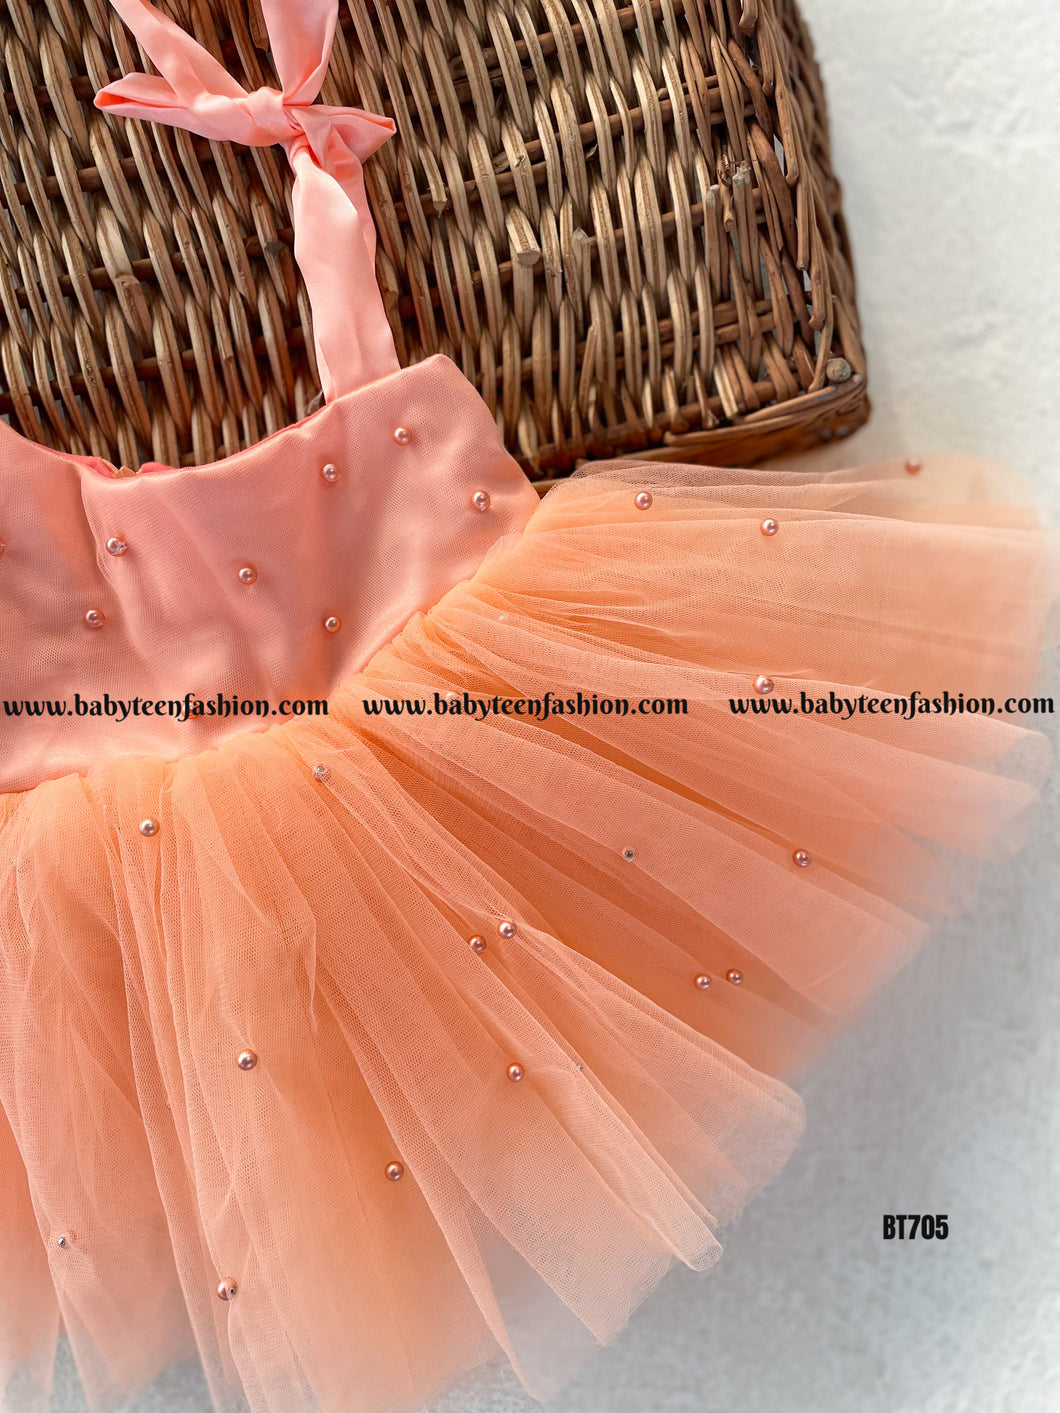 BT705 Peach Blossom Celebration Dress - Your Little One's Dream